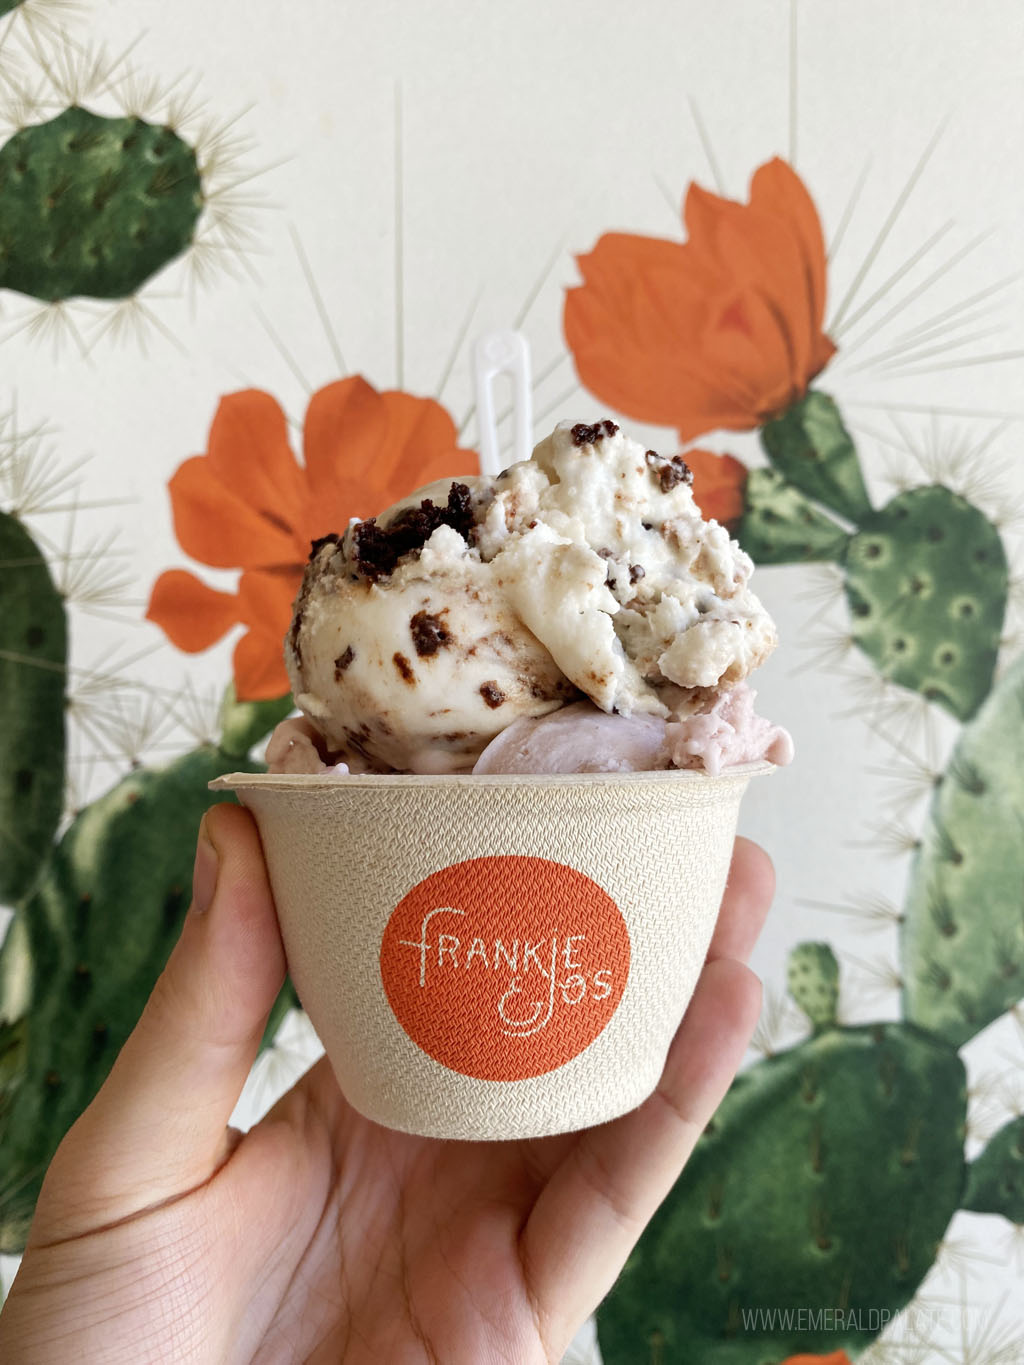 Frankie & Jo's cup of ice cream